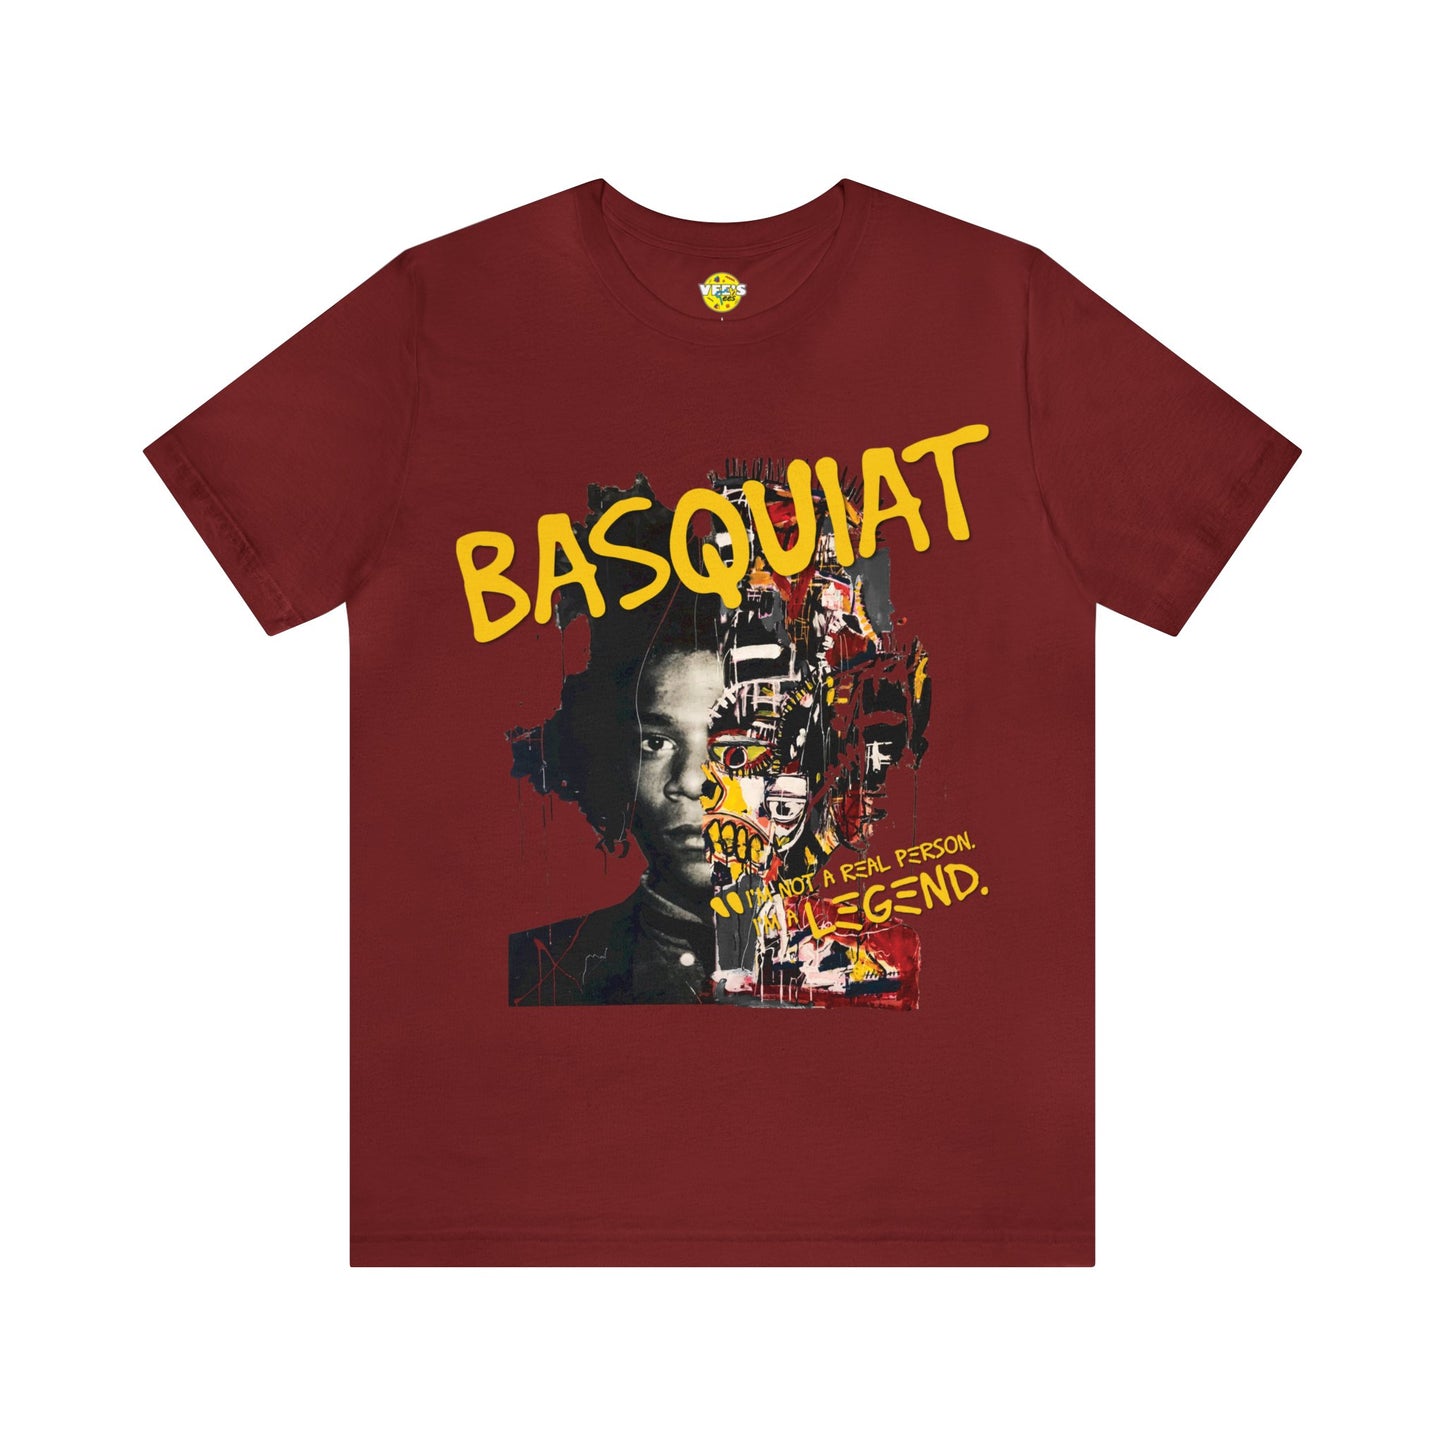 Basquiat Portrait Urban Art Icon Shirt, Jean-Michel Basquiat Quote Collage T-Shirt, Art Lover Fashion Graphic Tee, Black History Month